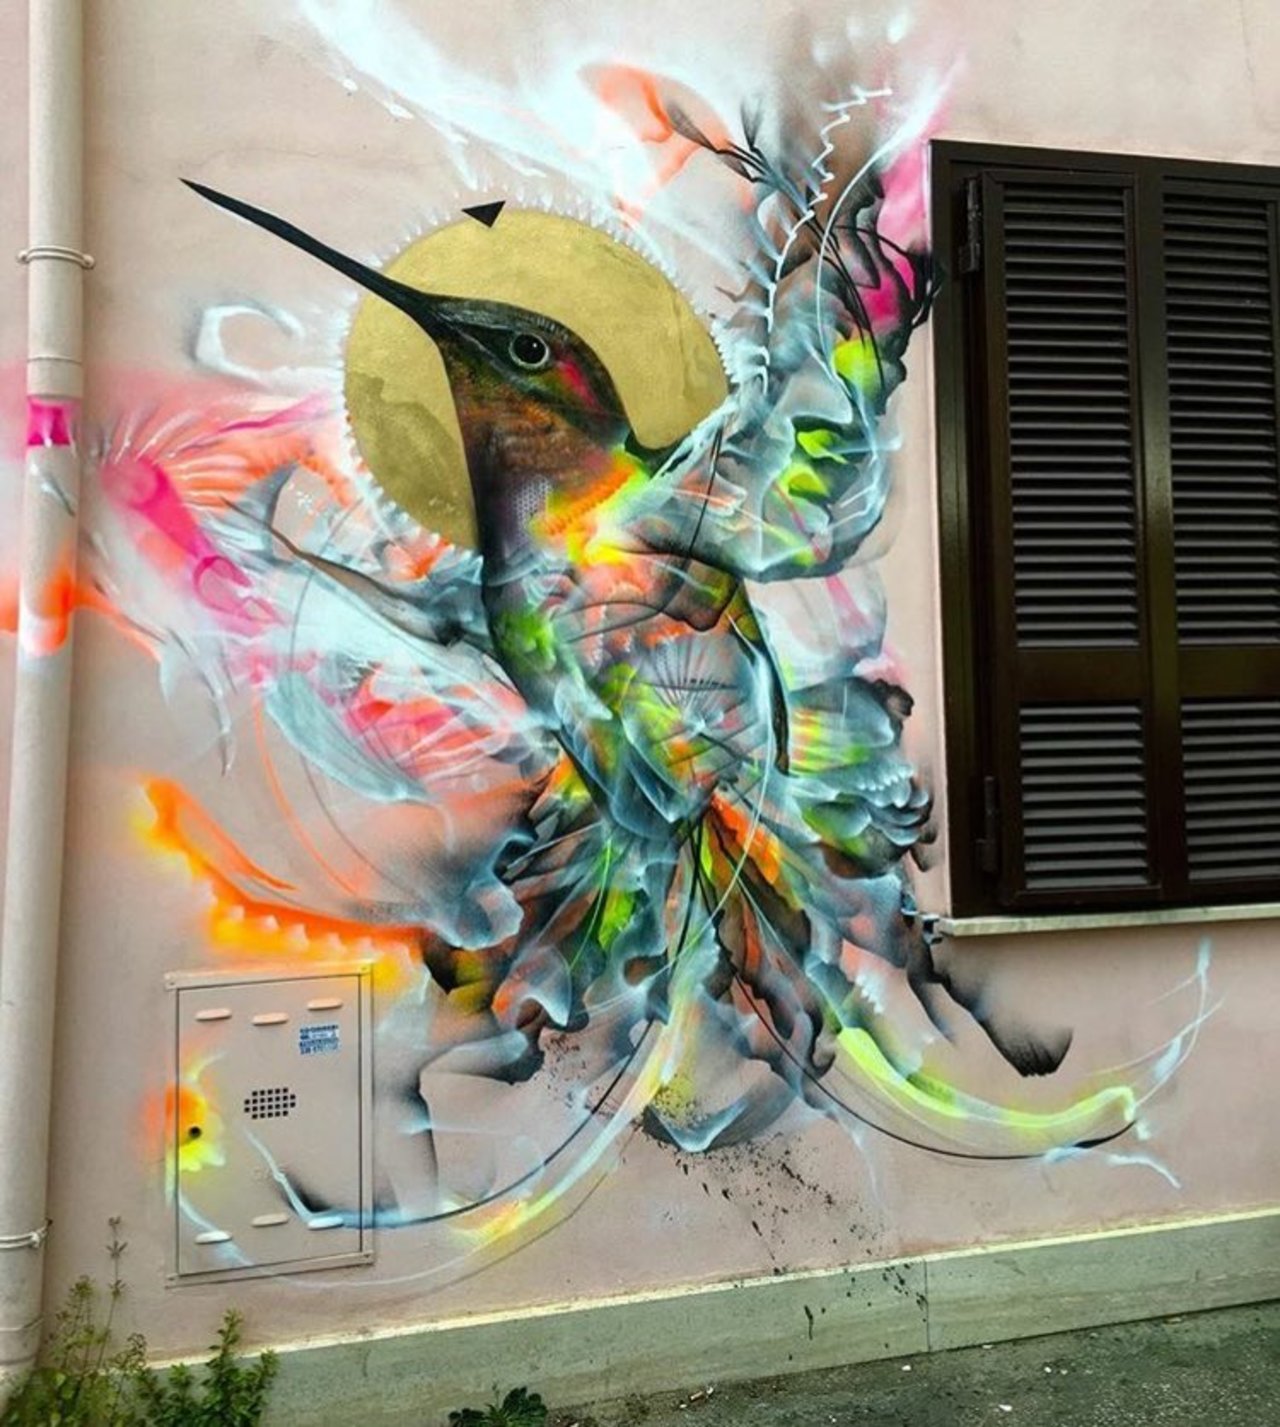 New Street Art by L7mRome Italy #art #mural #graffiti #streetart https://t.co/CzJpFaAxNL